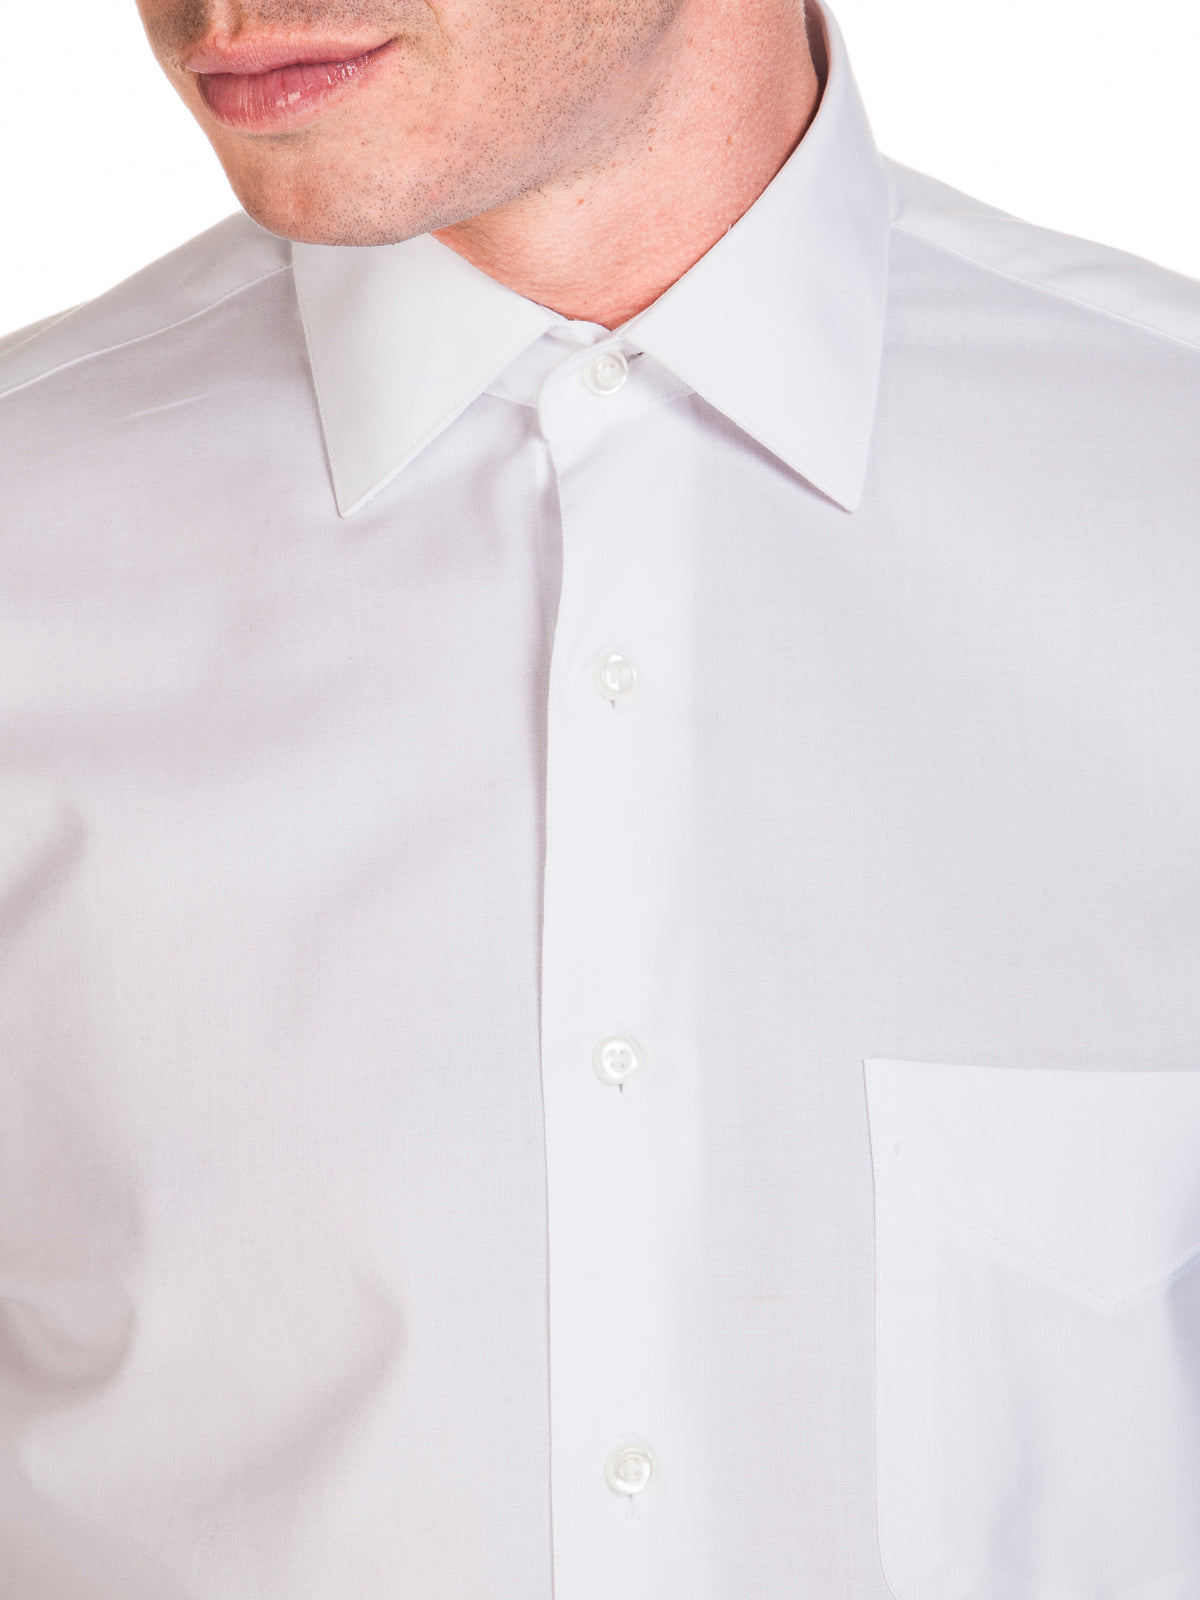 White Gold Label Shirt – Classic Fit - Ganton Shirts